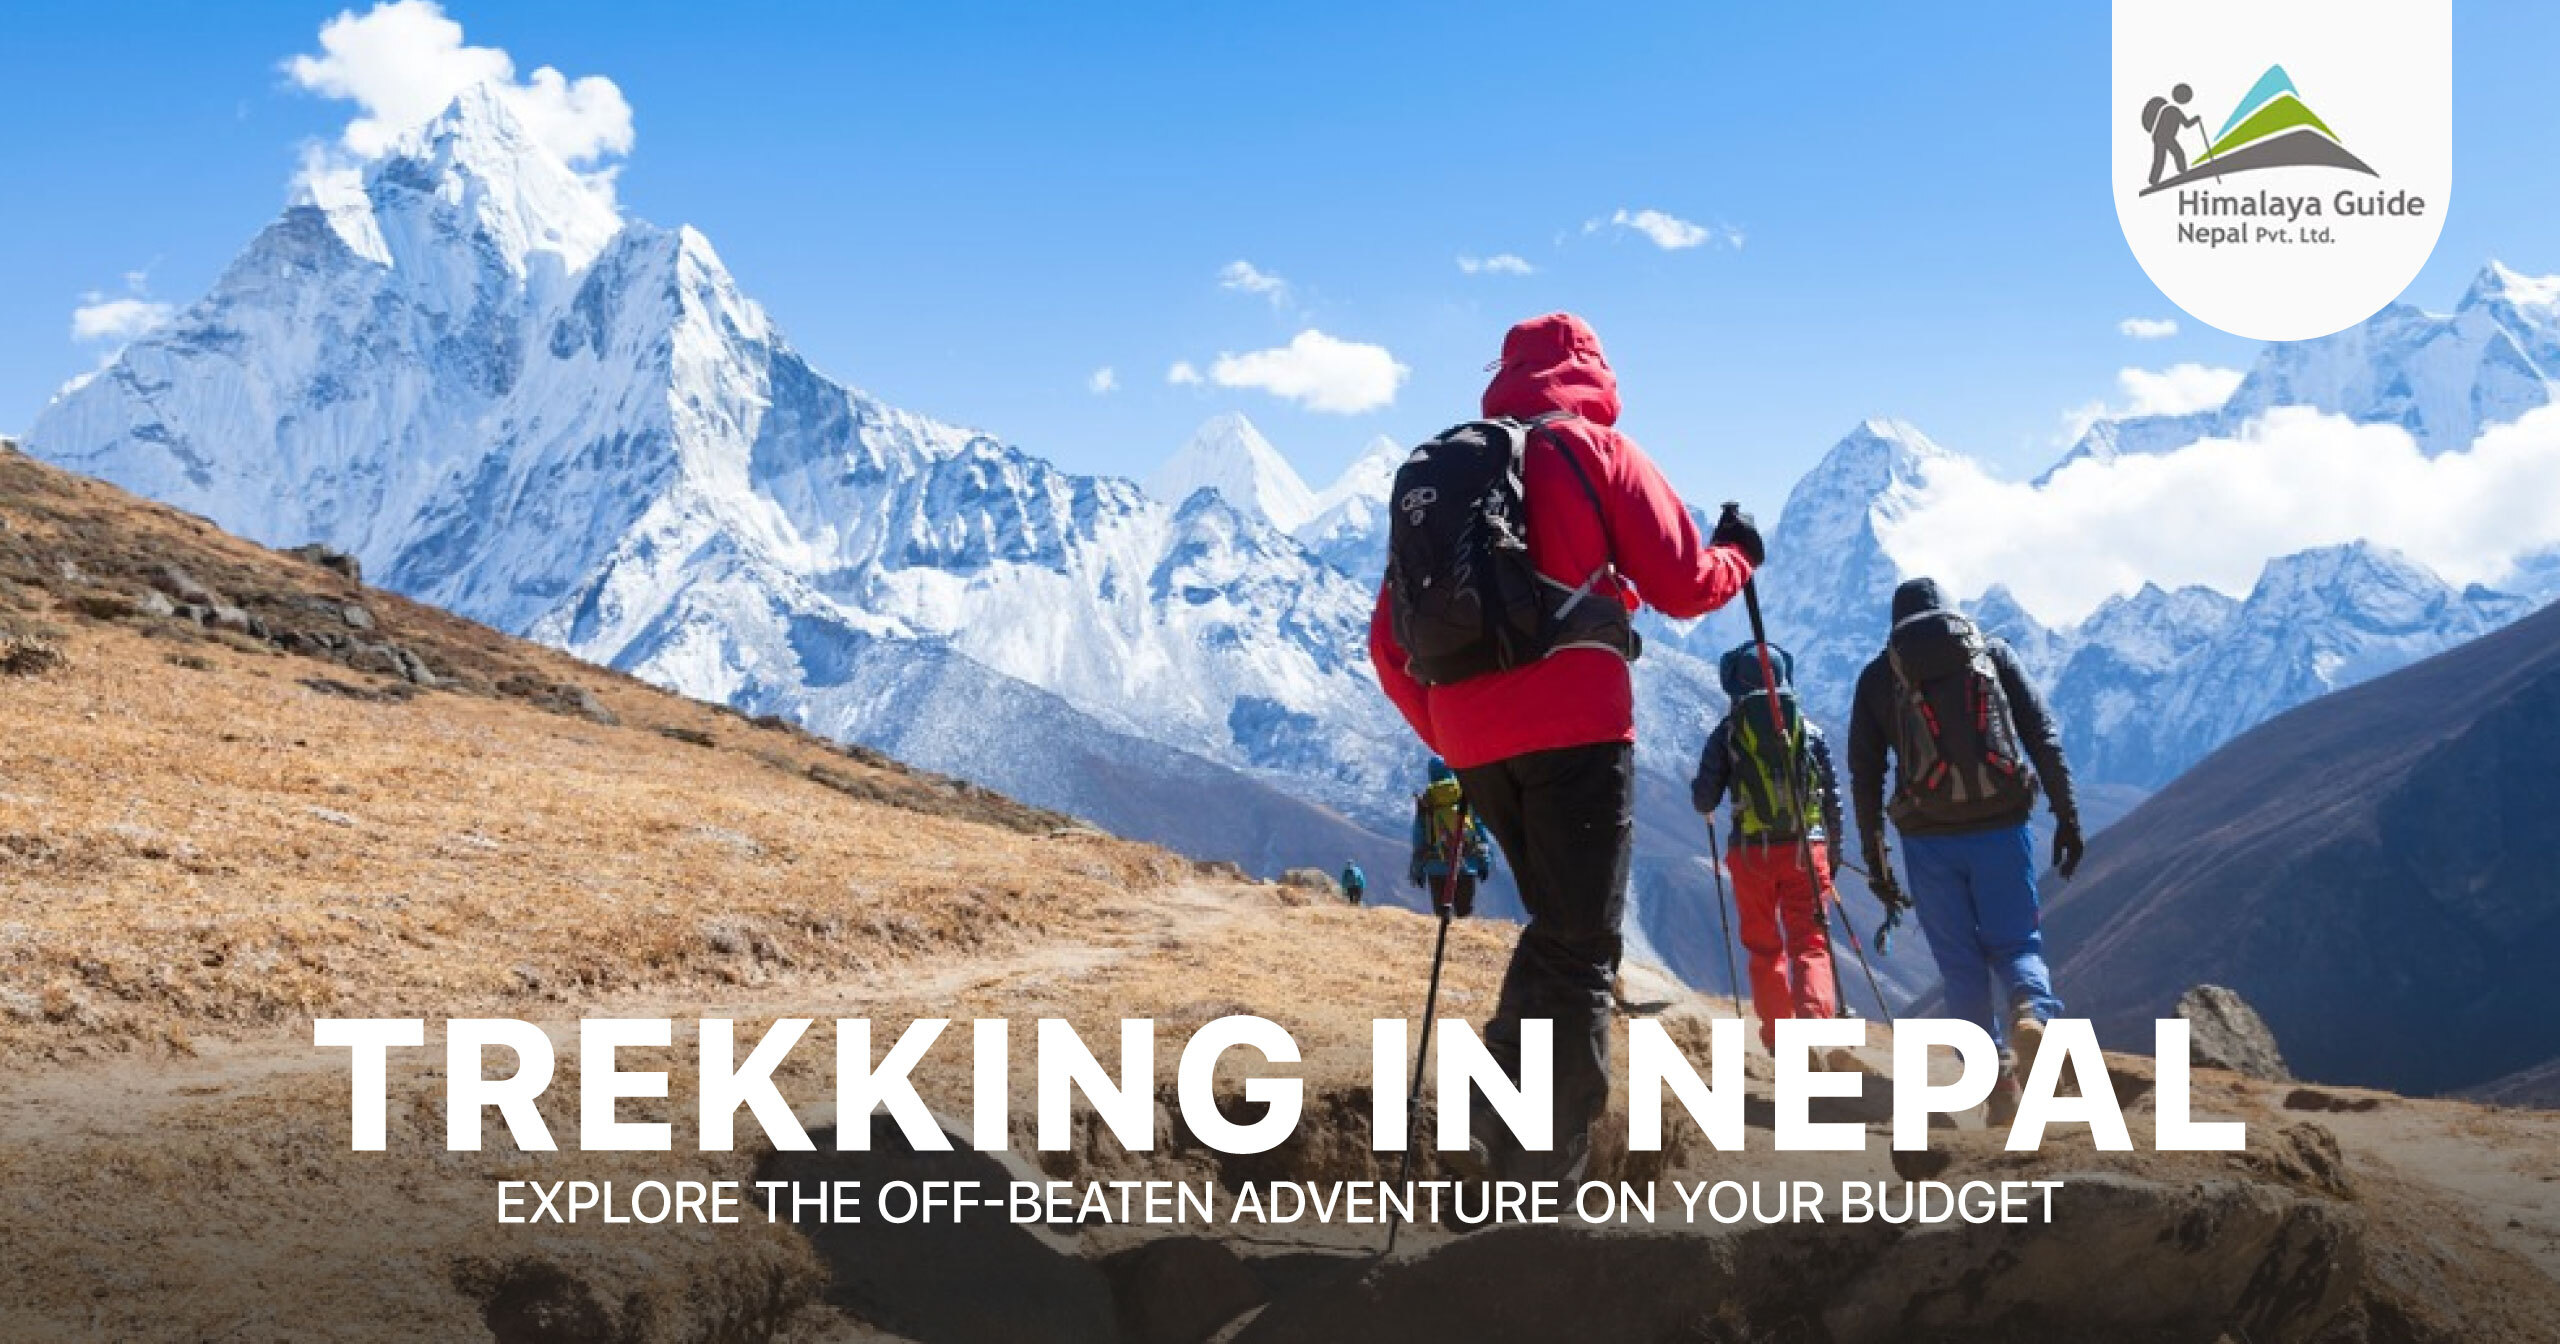 Trekking in Nepal: Explore the Off-beaten Adventure on your Budget